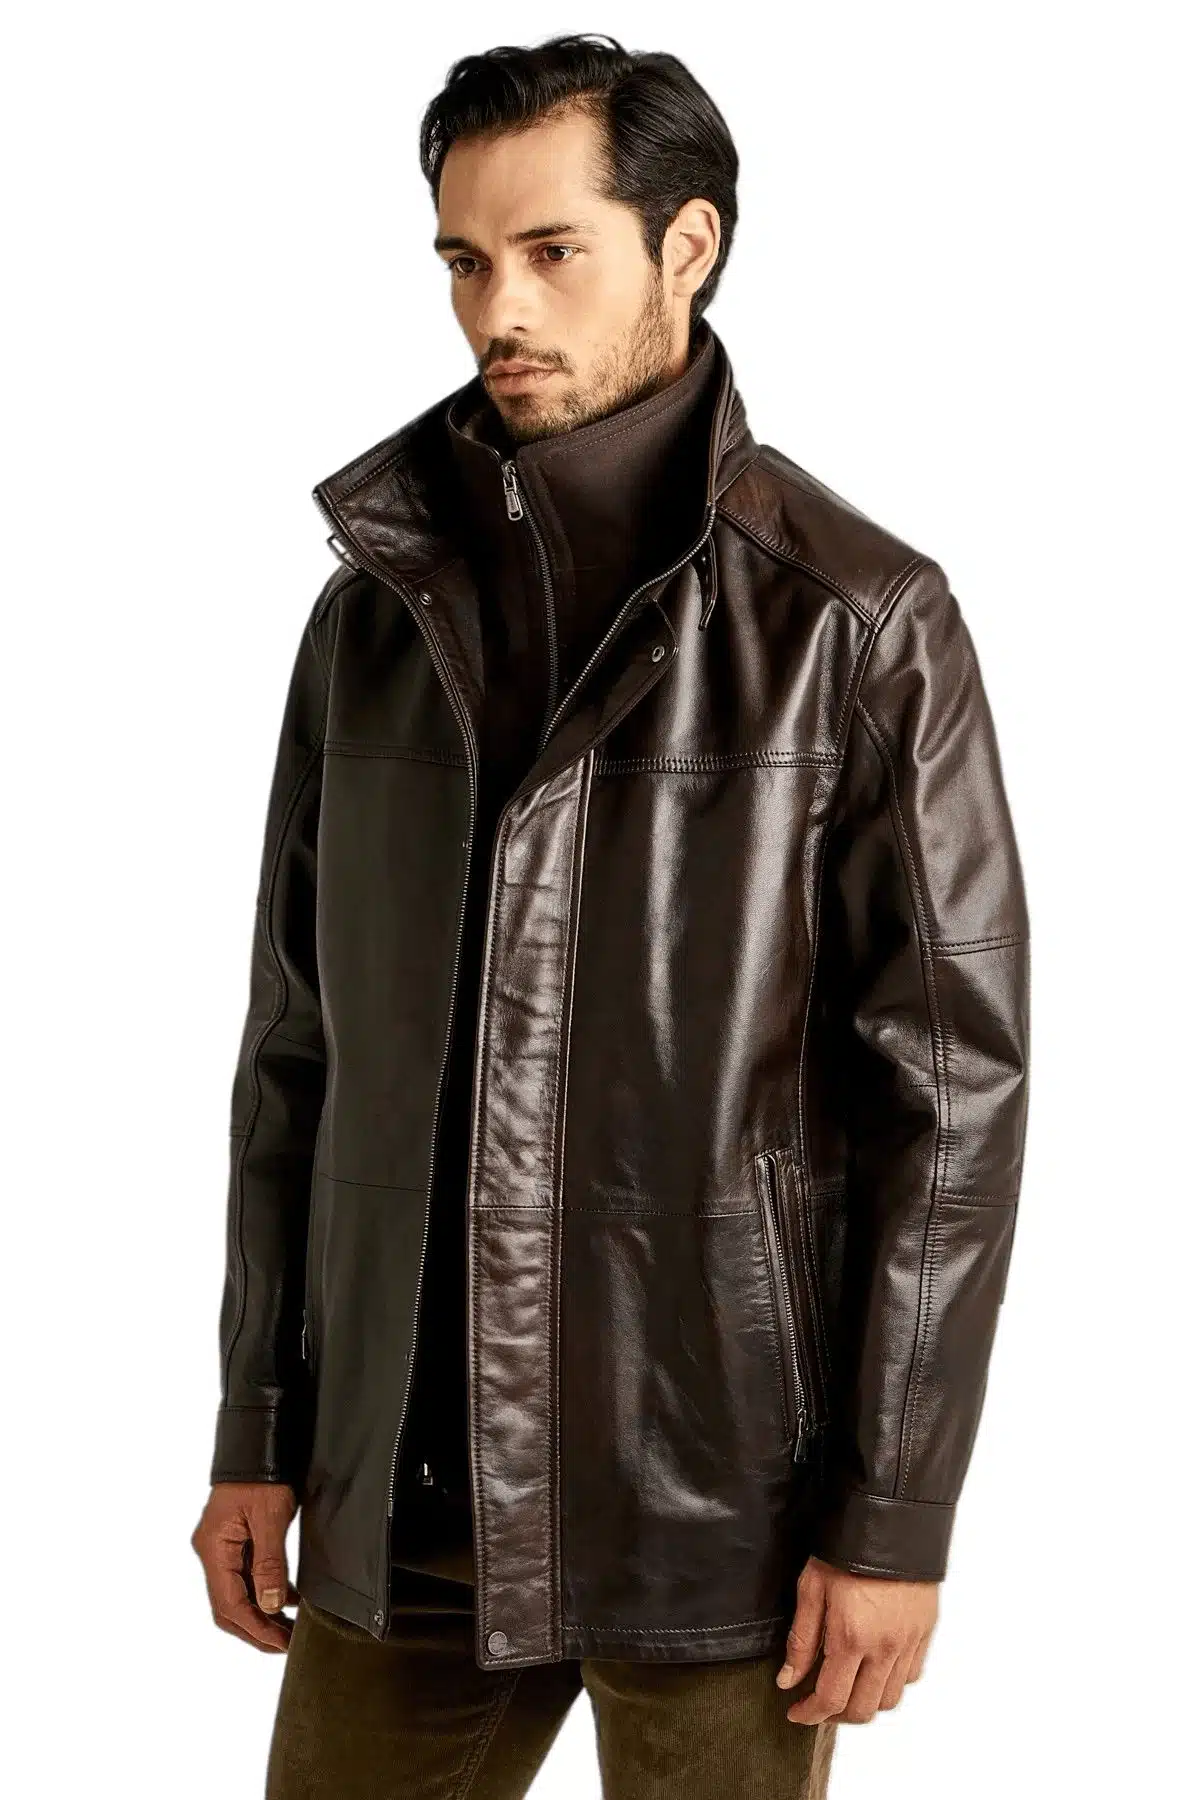 Vintage Style Men’s Leather Jacket in Brown (2)_result